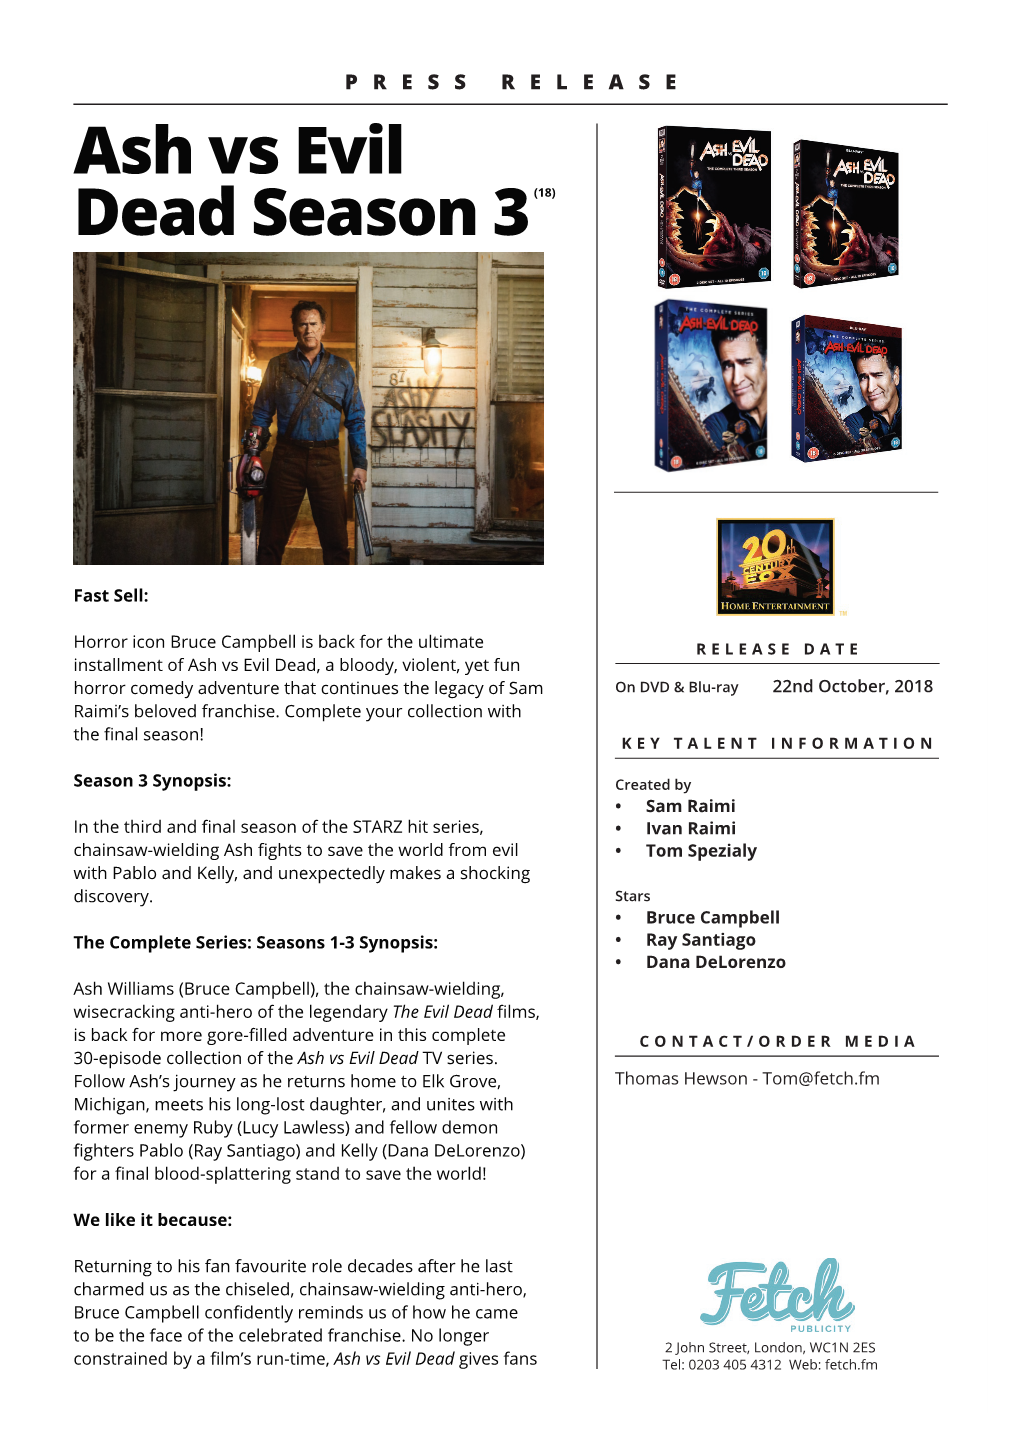 Ash Vs Evil Dead S3 Press Release.Indd